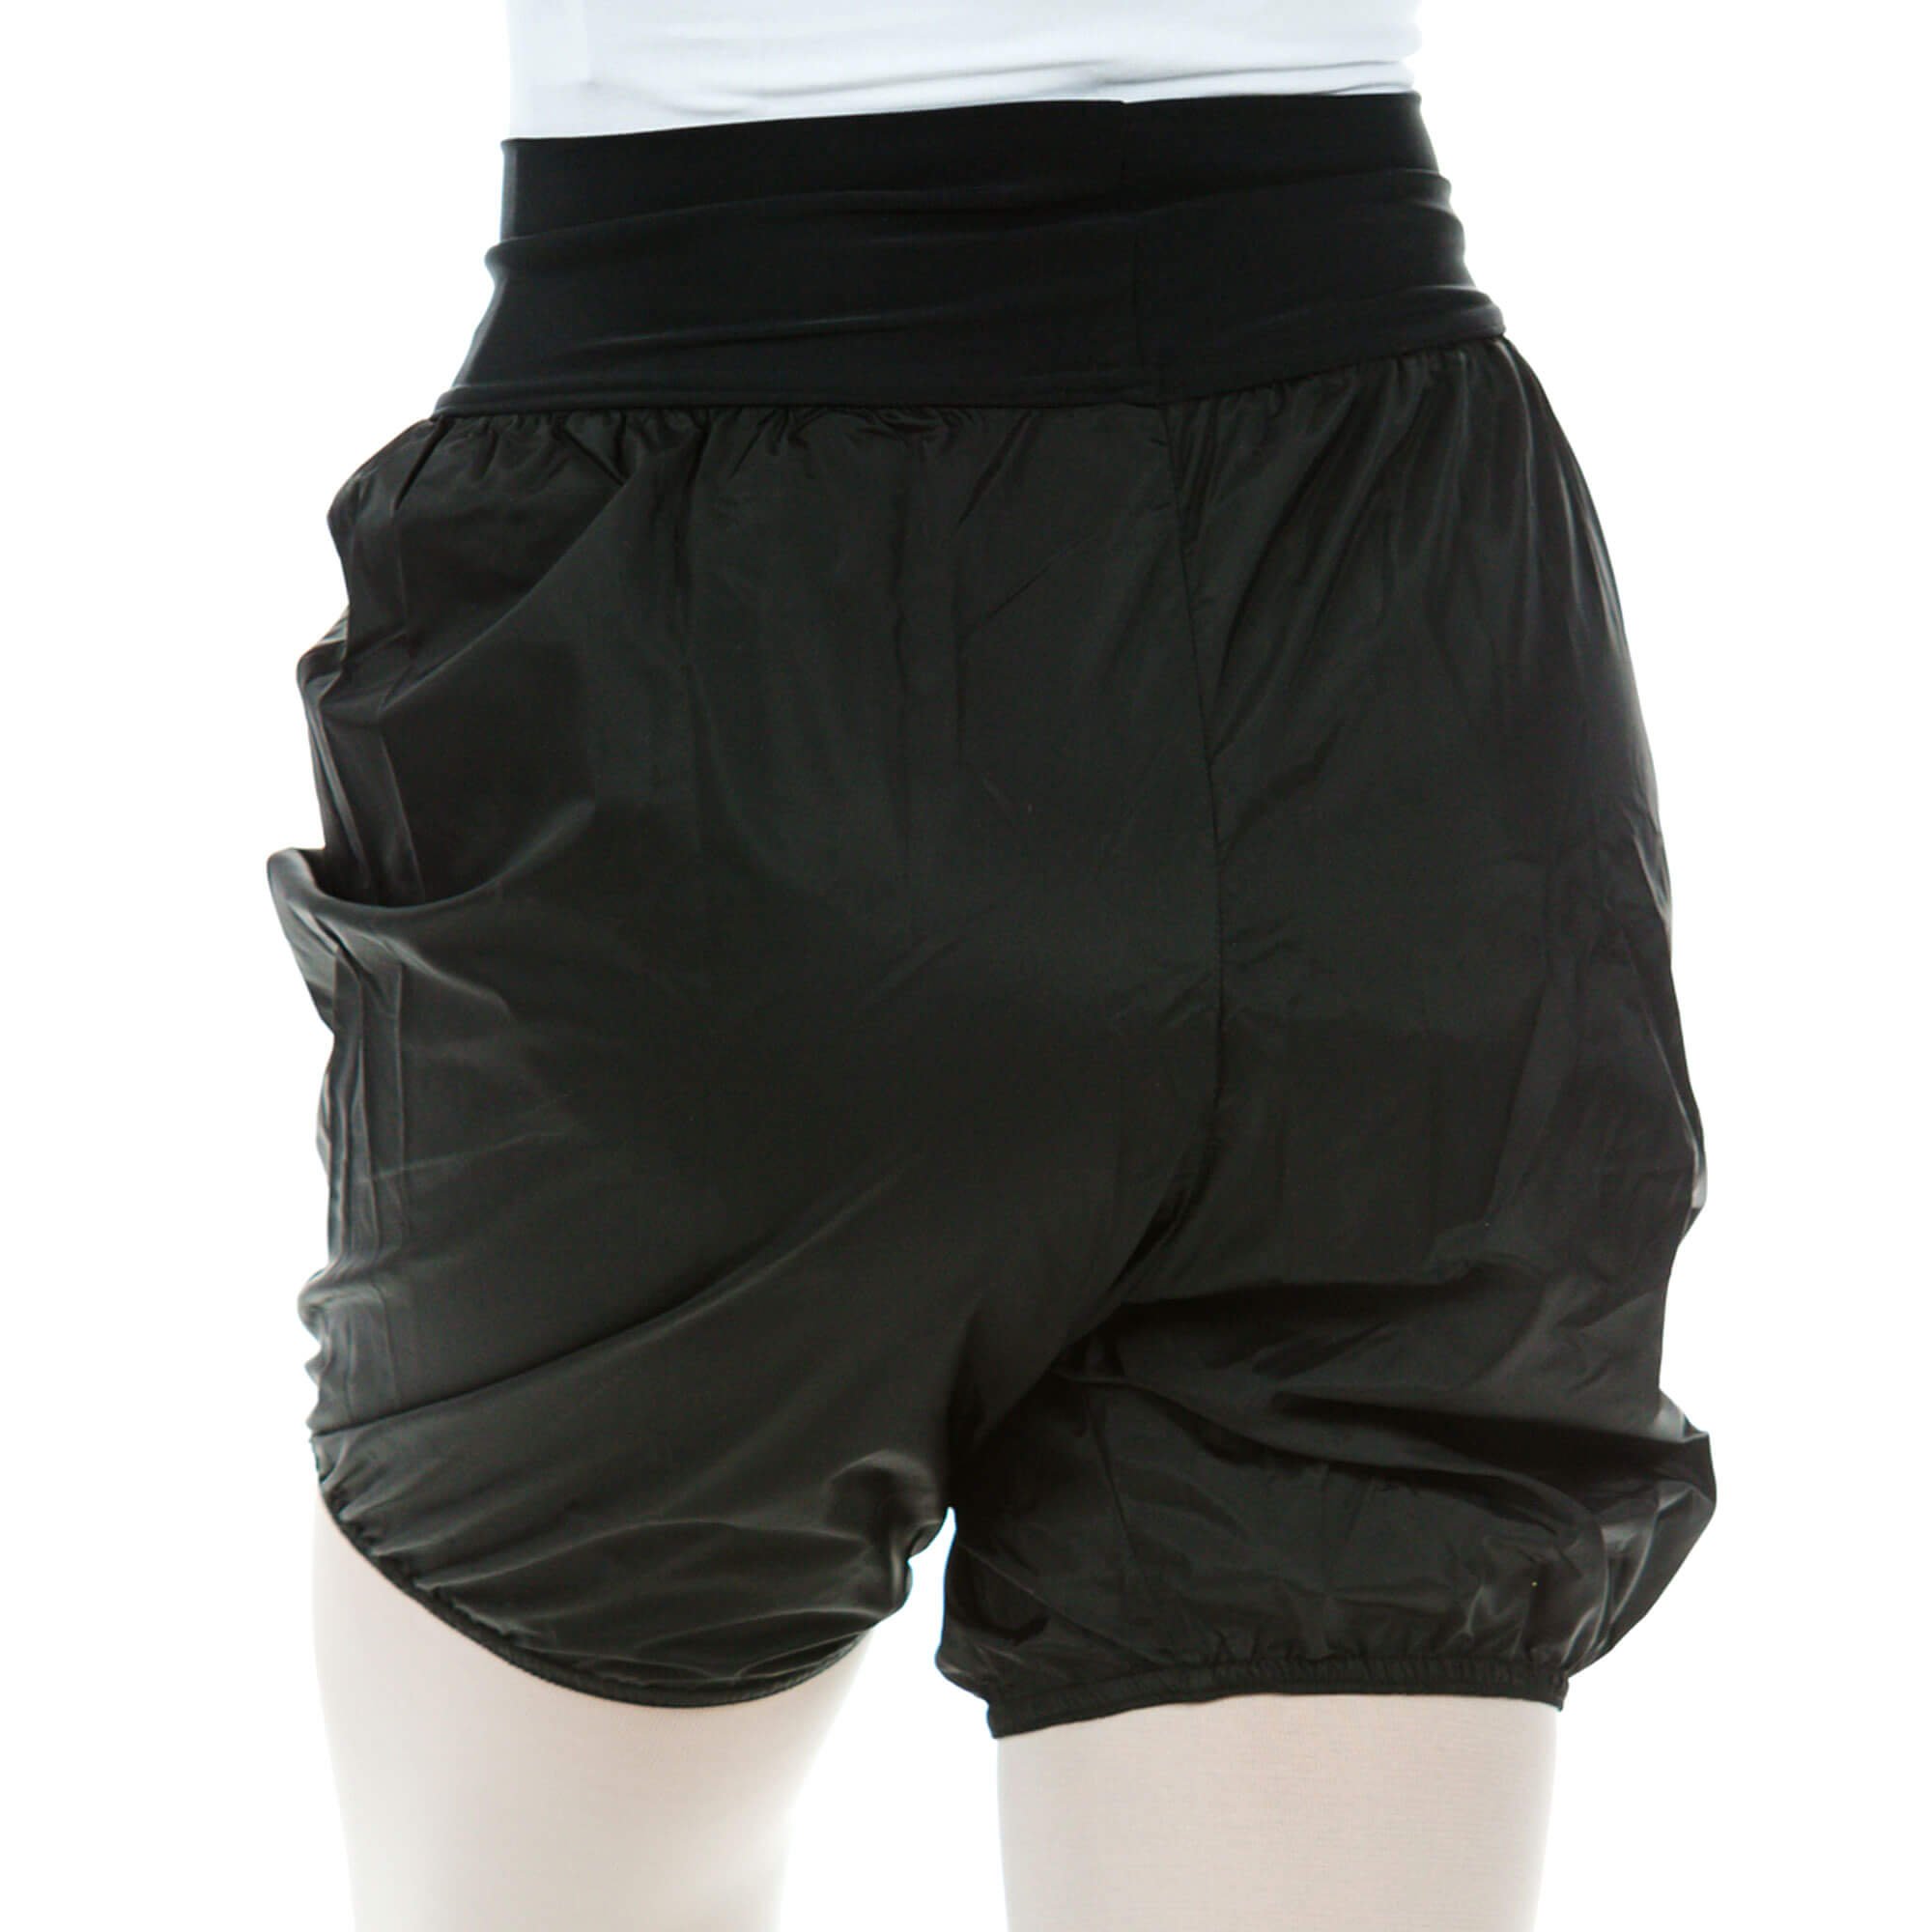 Coesi Danza Short Warm-up Sweatpants - Click Image to Close